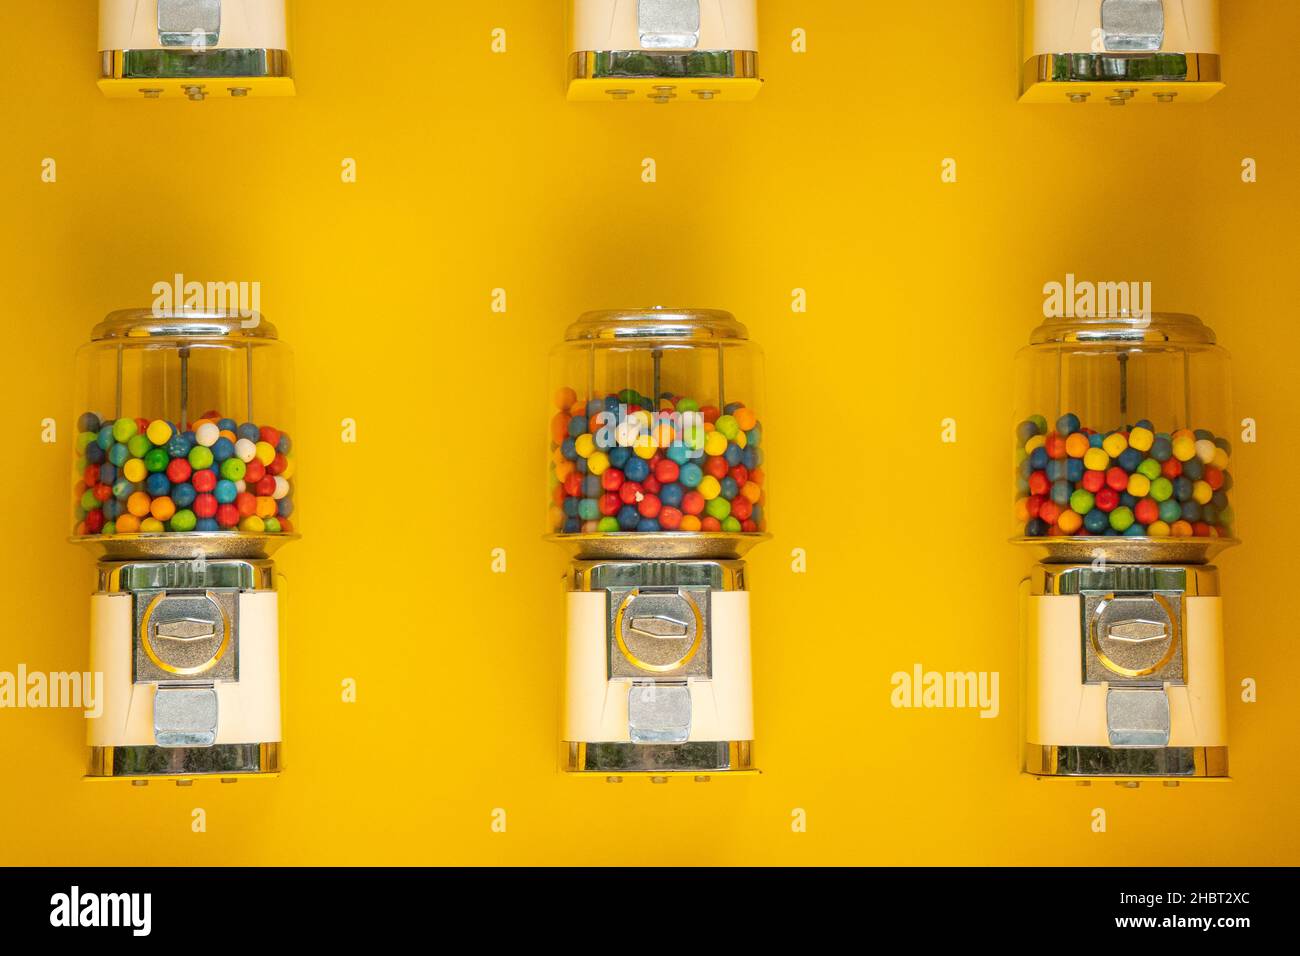 Gummiball-Automaten gegen eine gelbe Wand Stockfoto